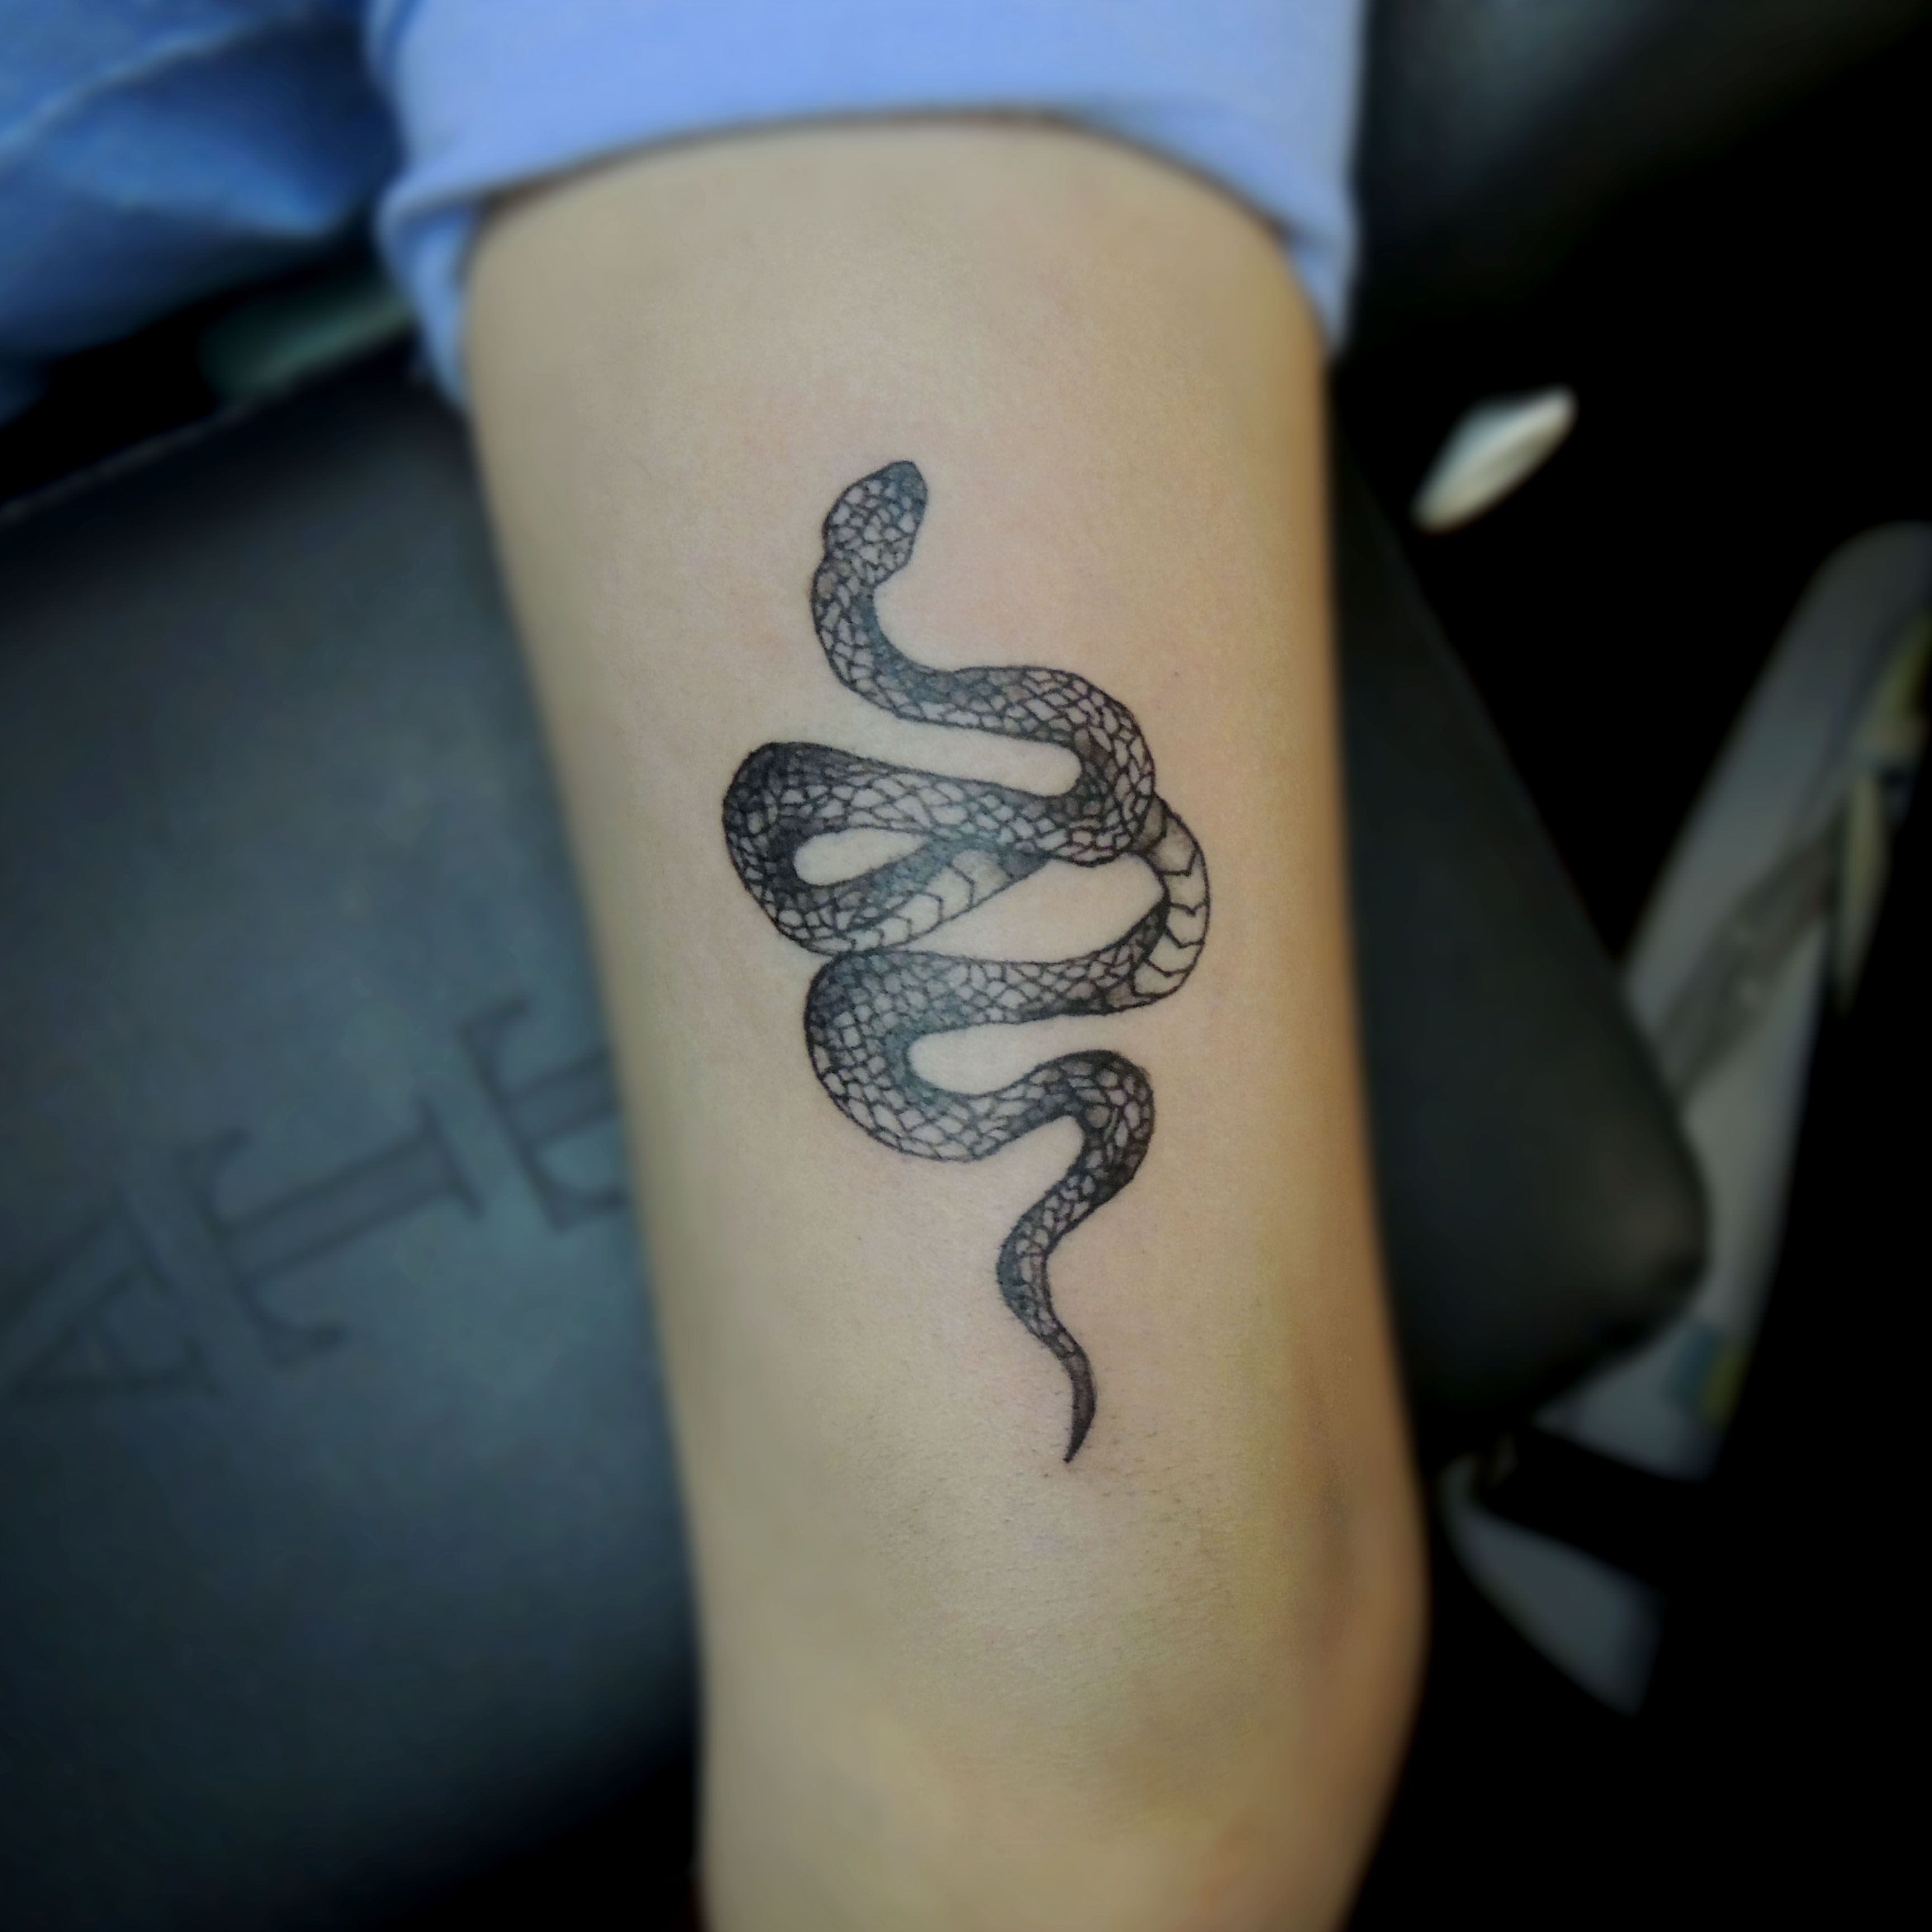 Tattoo uploaded by Rafa Chami • Serpiente pequeña en brazo • Tattoodo